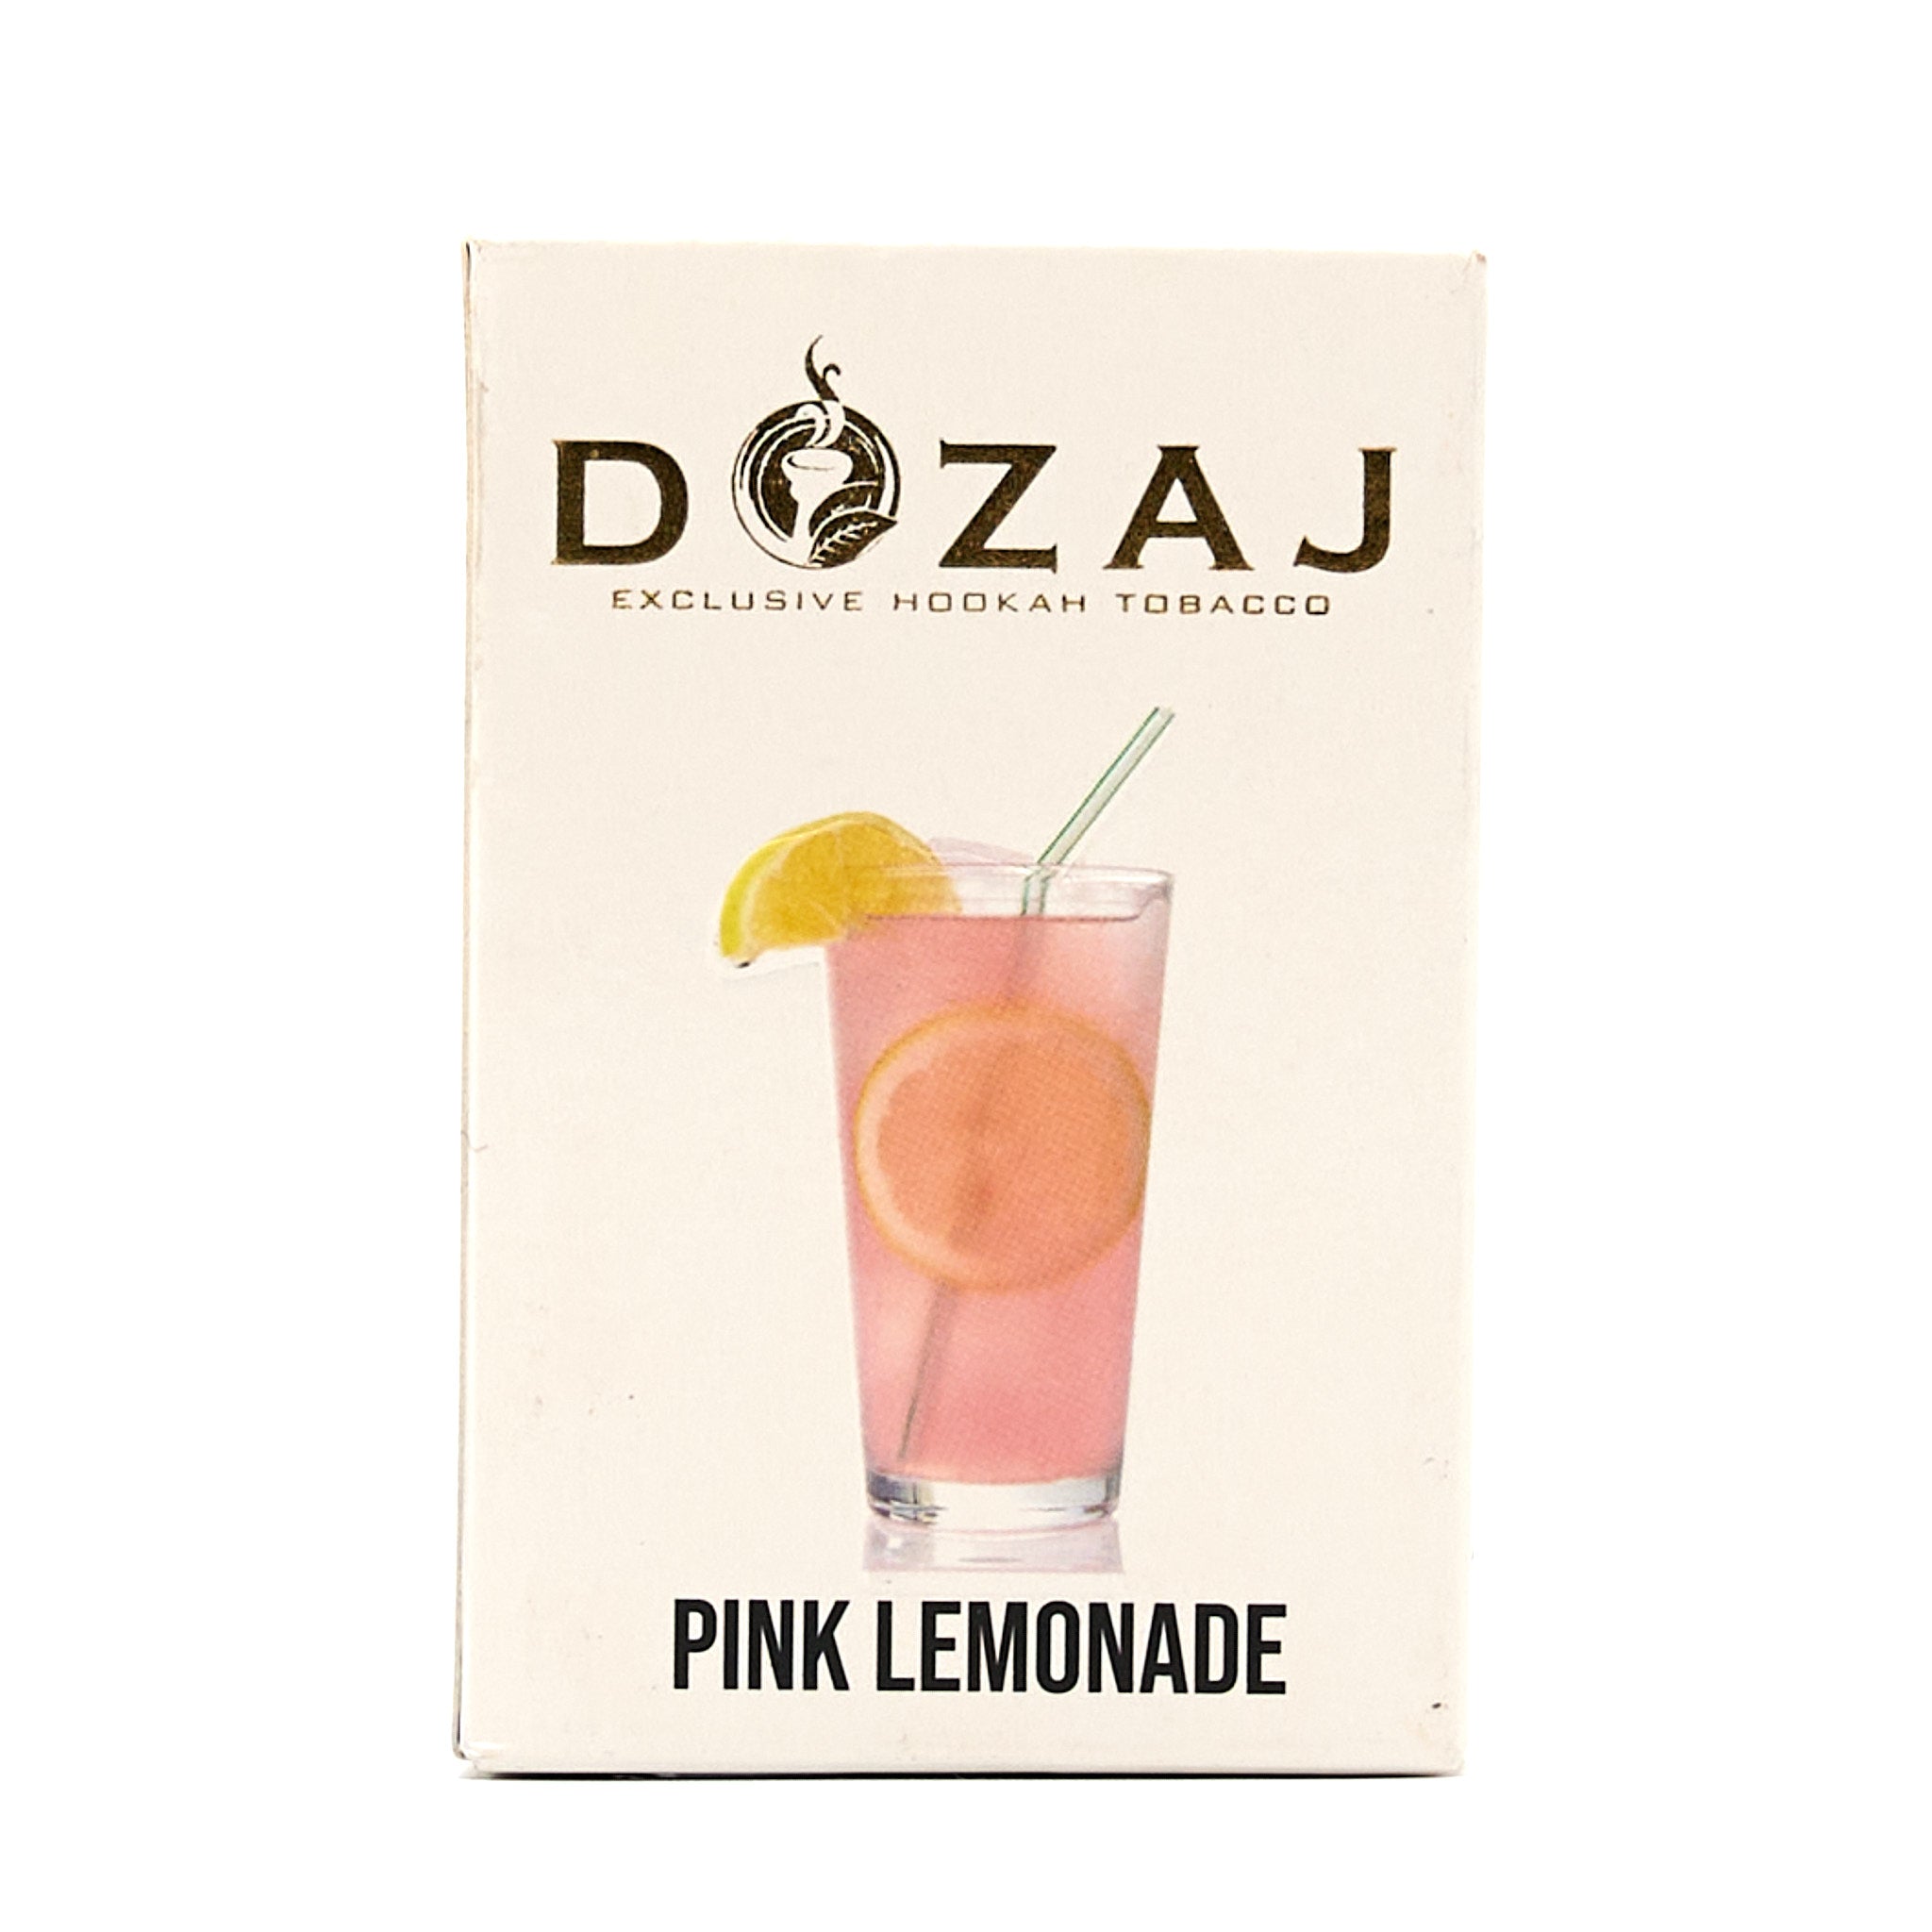 Pink lemonade / ピンクレモネード (50g)